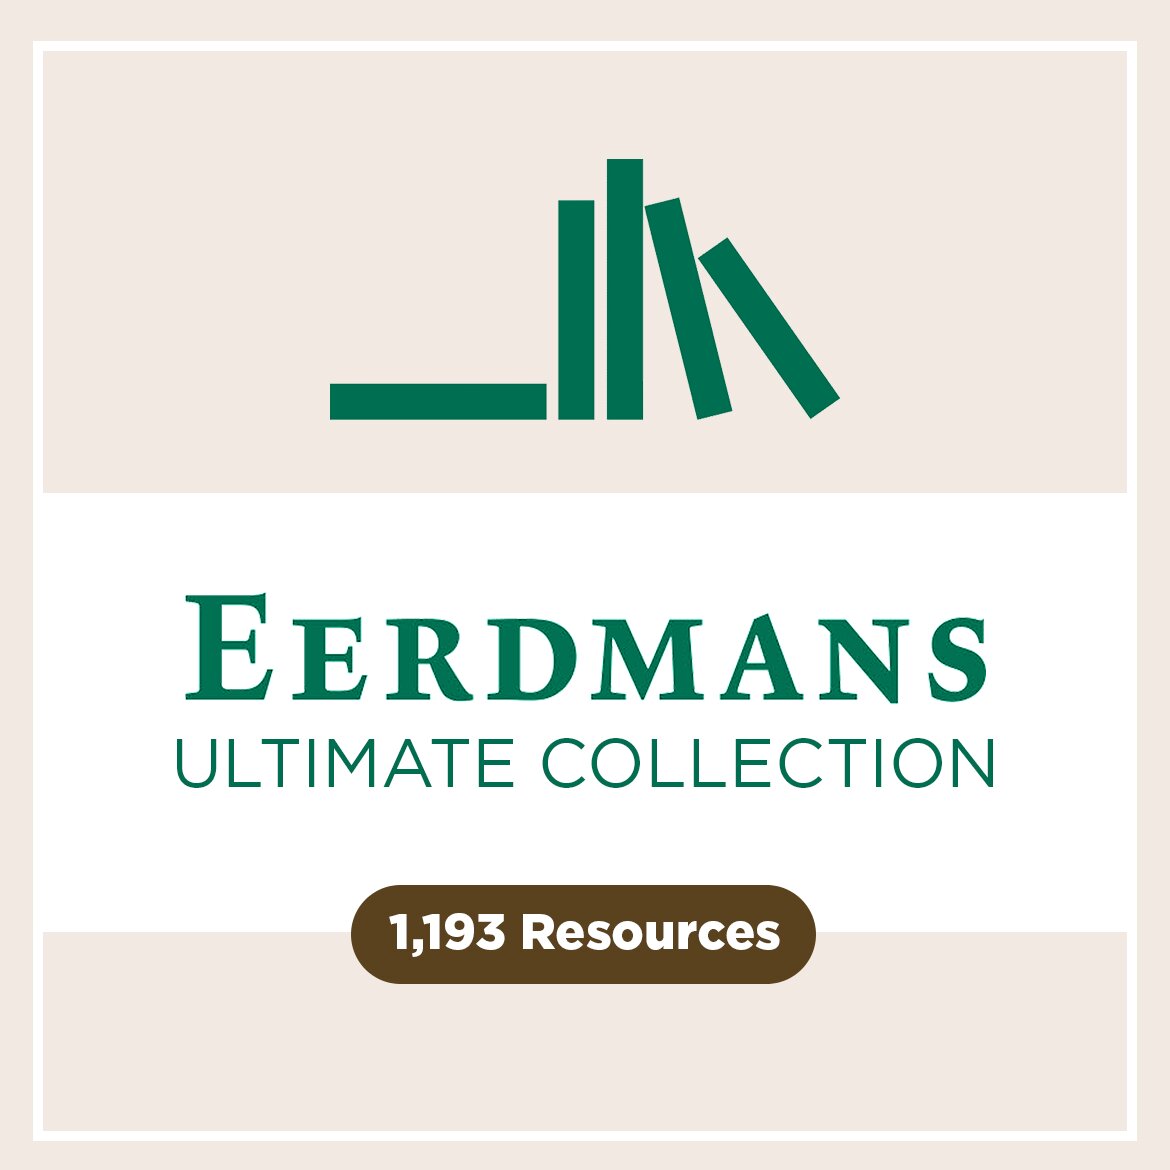 Eerdmans Ultimate Collection (1,193 Resources)